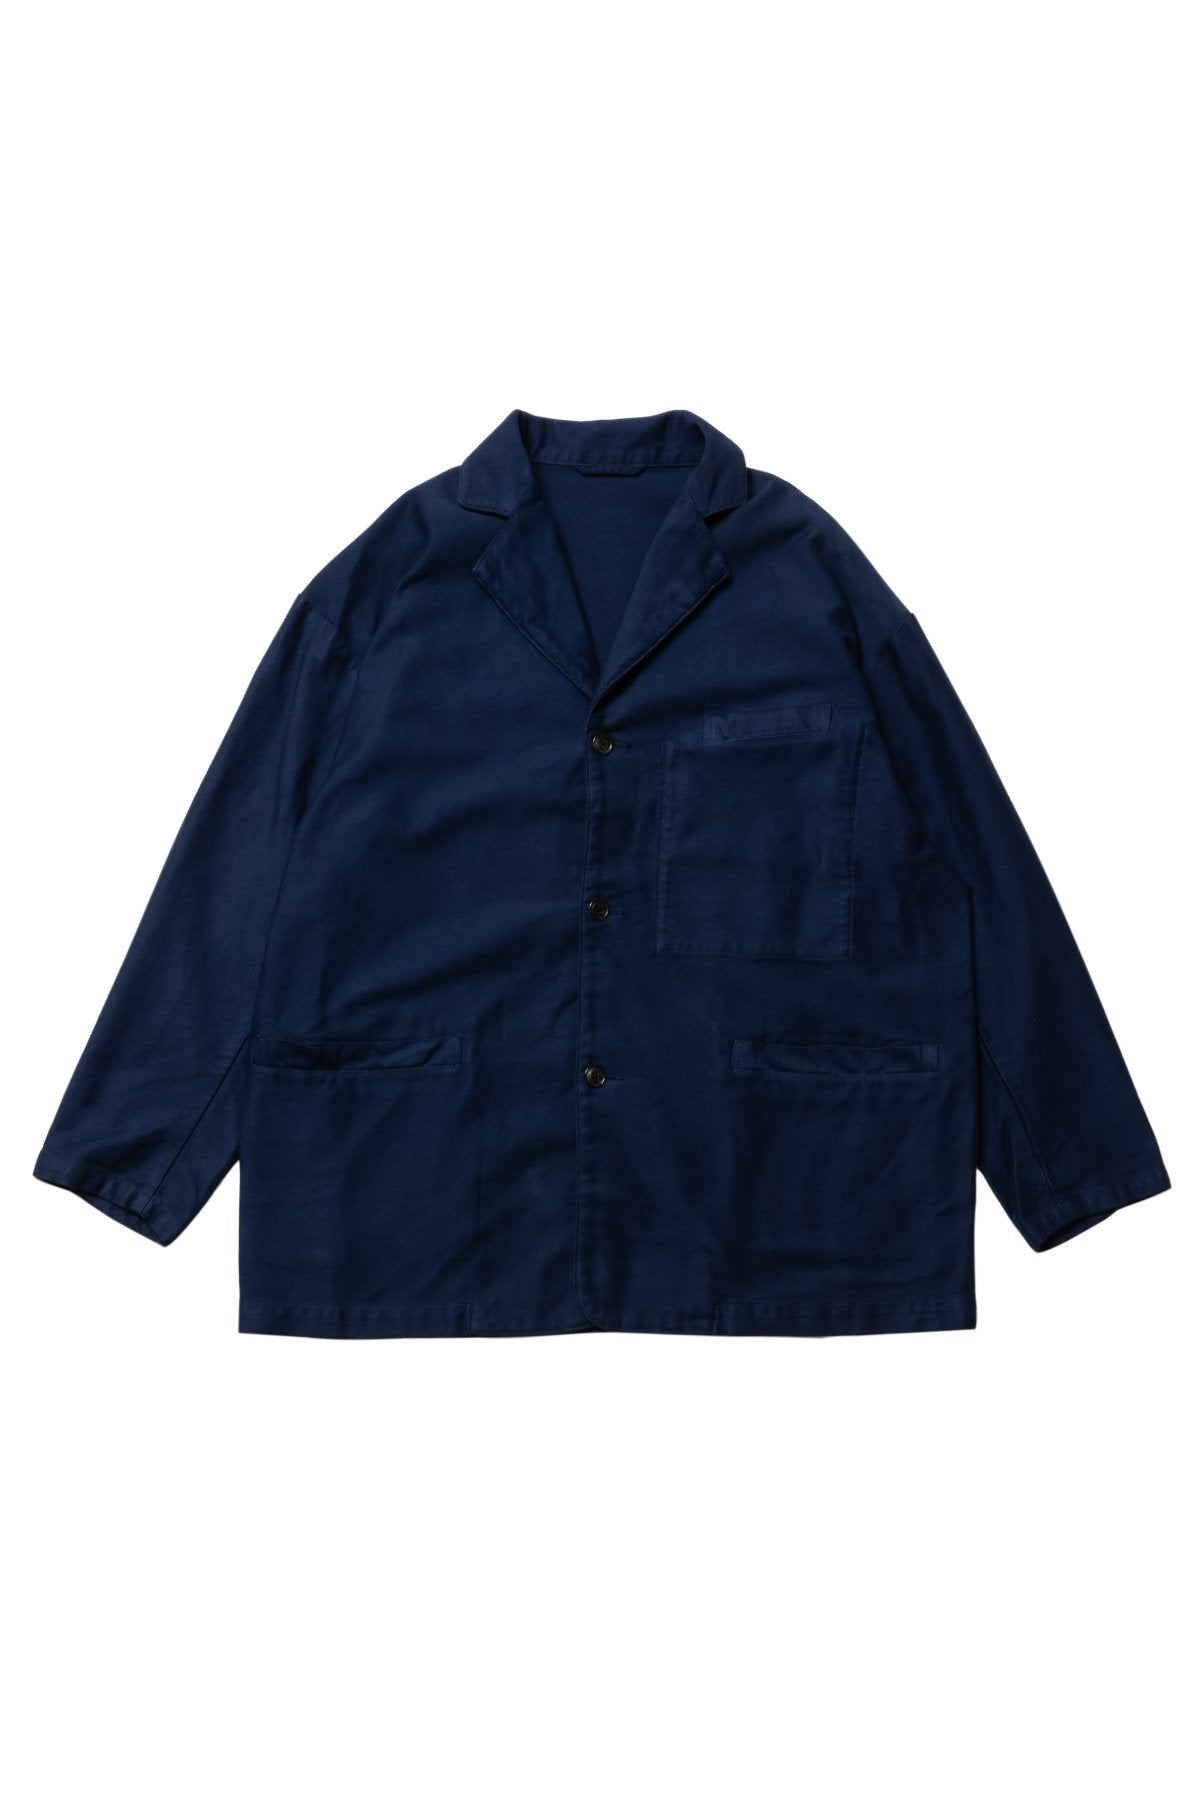 PorterClassicMOLESKIN jacketメンズ - テーラードジャケット